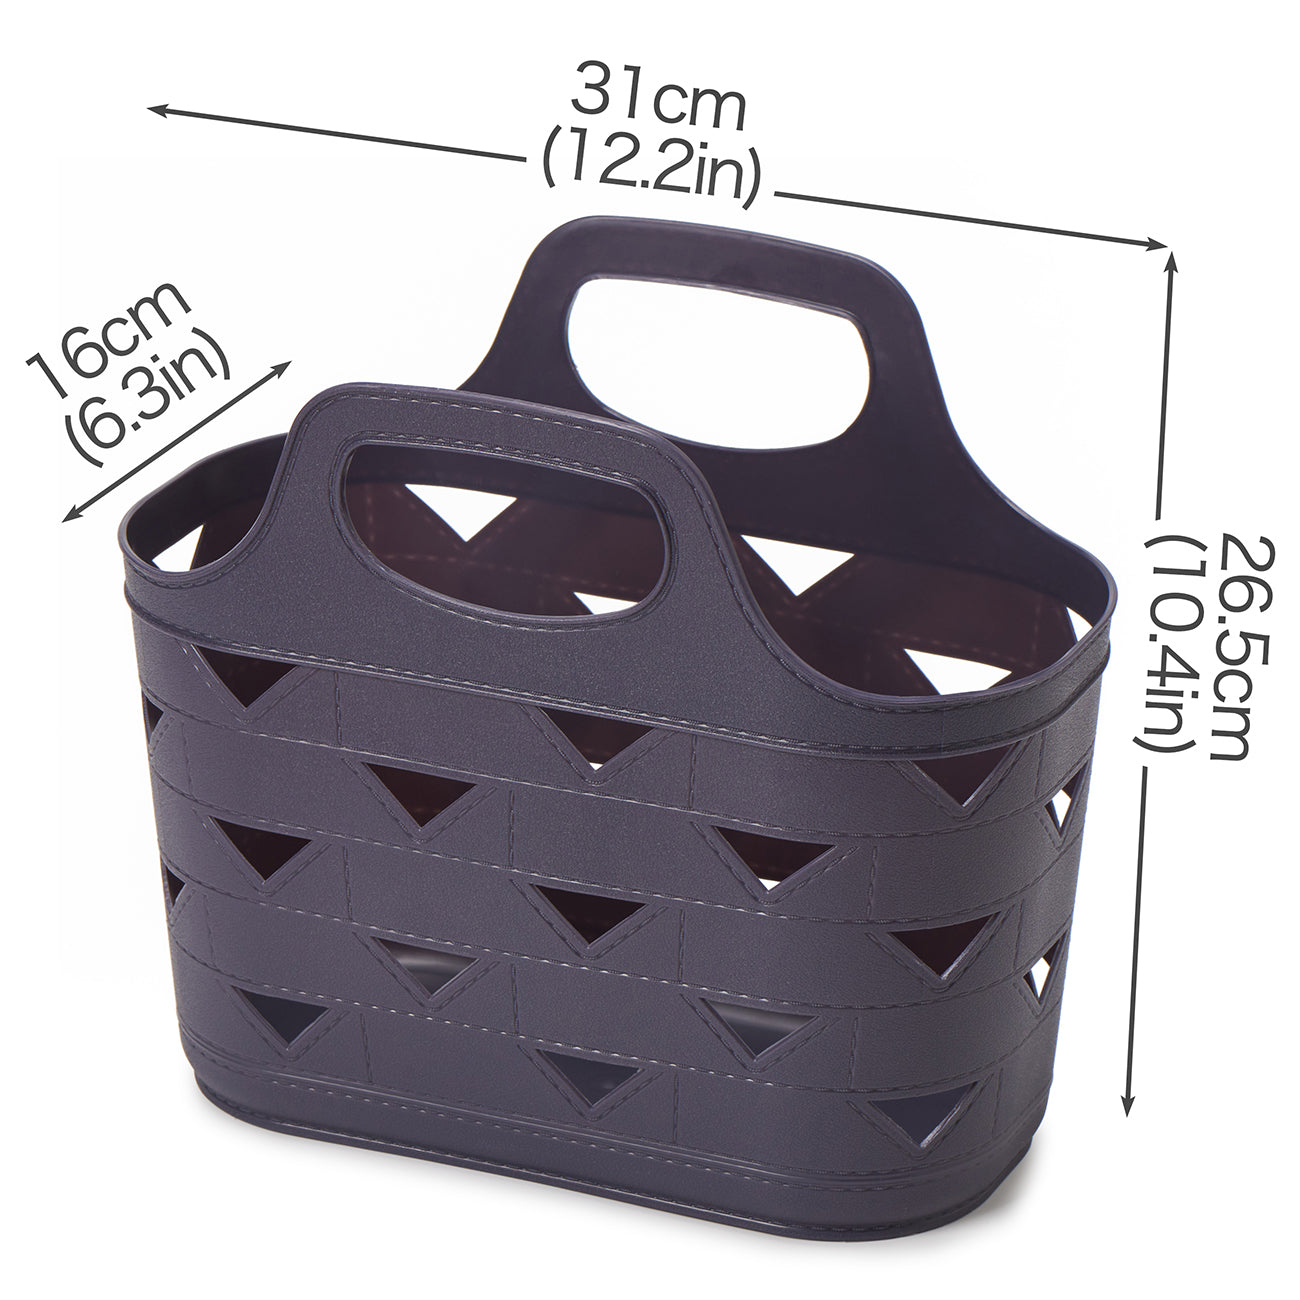 Set of 6 Plastic Storage Baskets - Small Pantry Organizer Basket